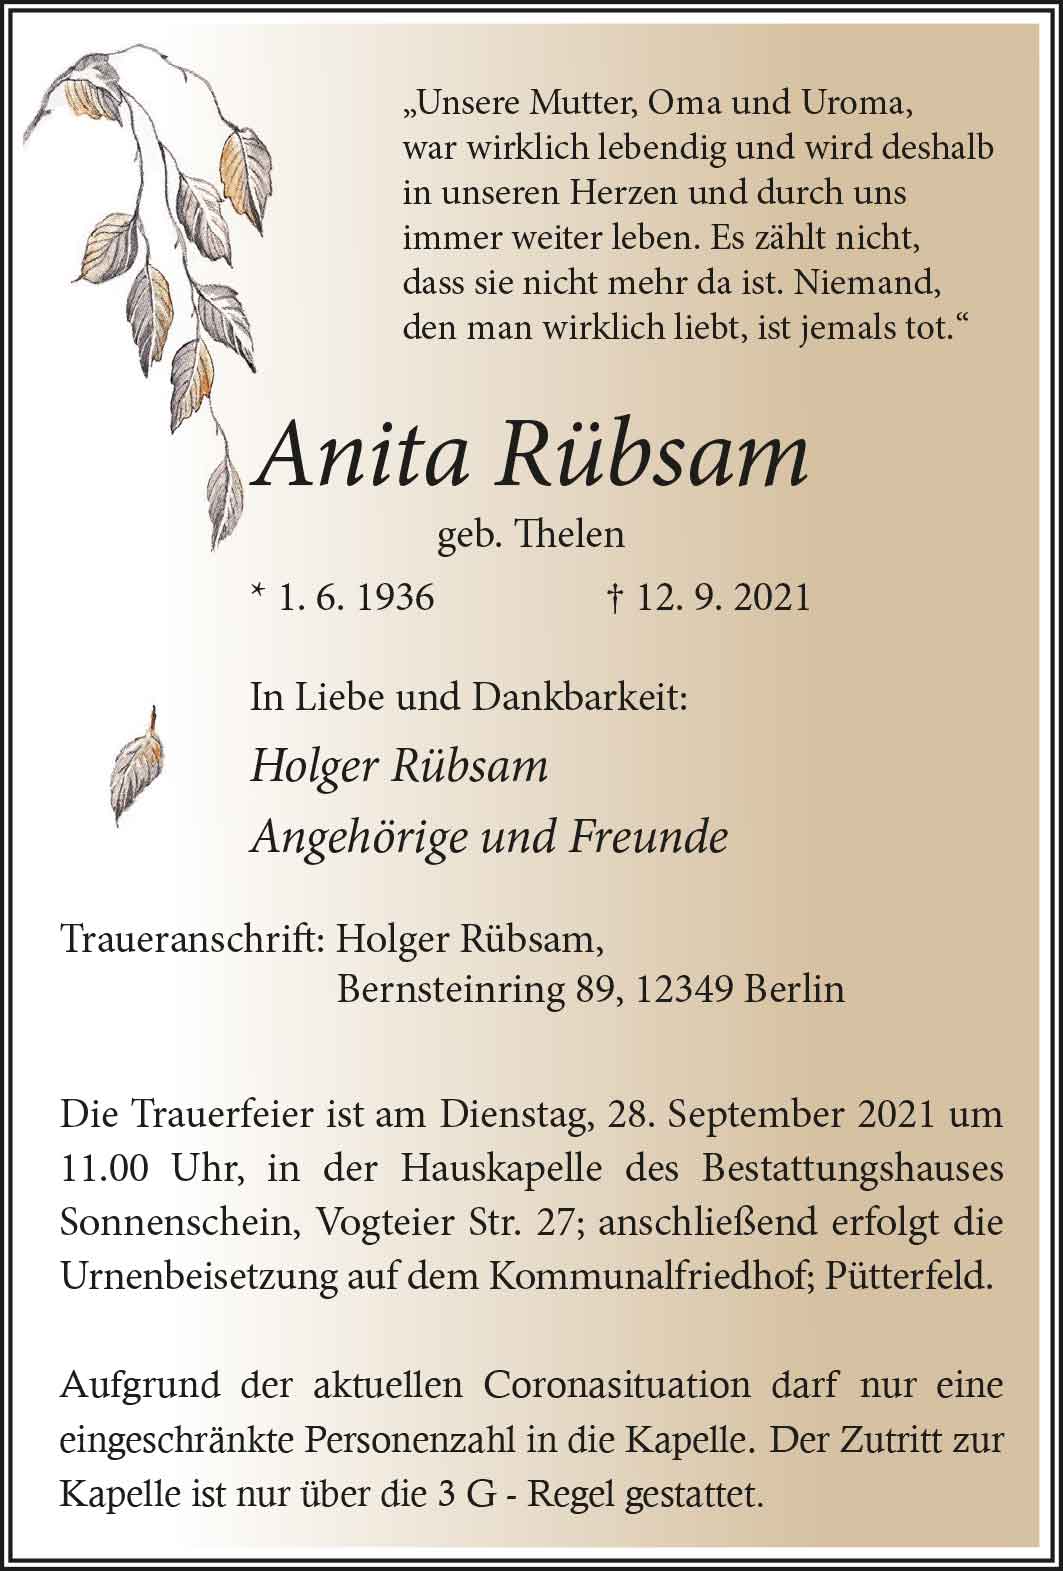 Anita Rübsam † 12. 9. 2021